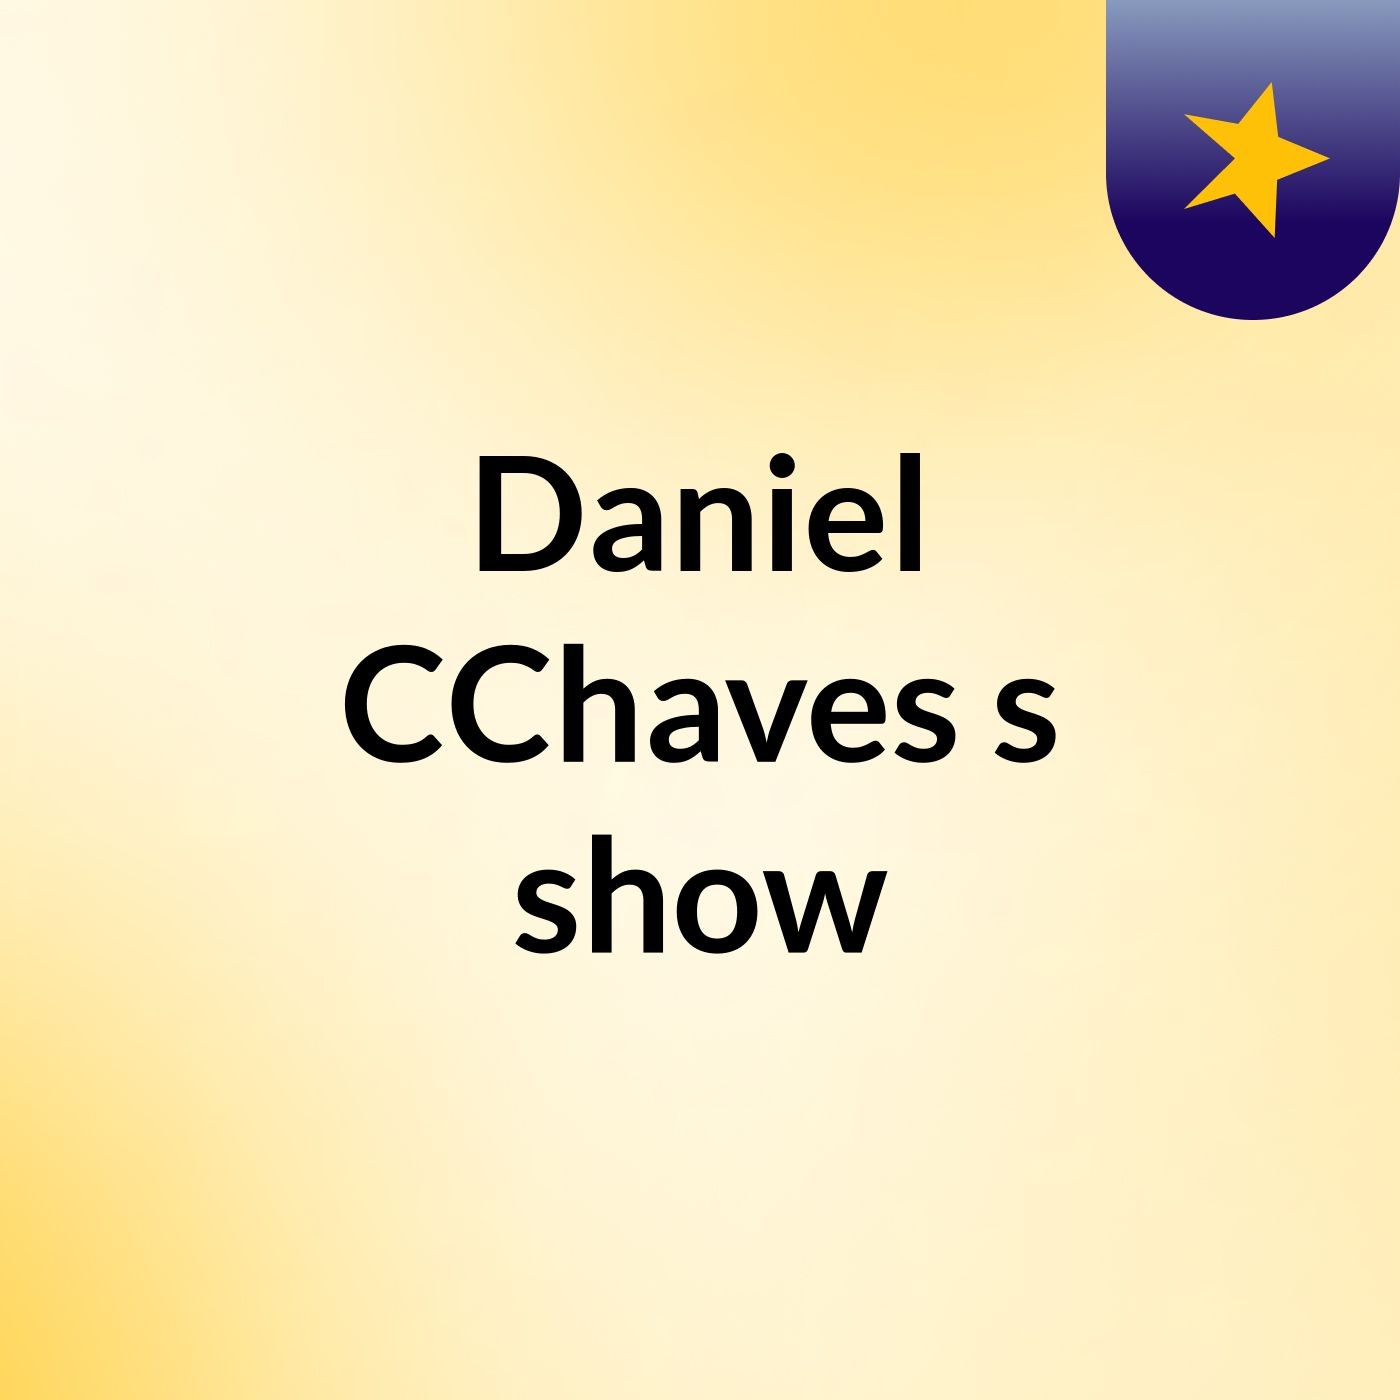 Daniel CChaves's show